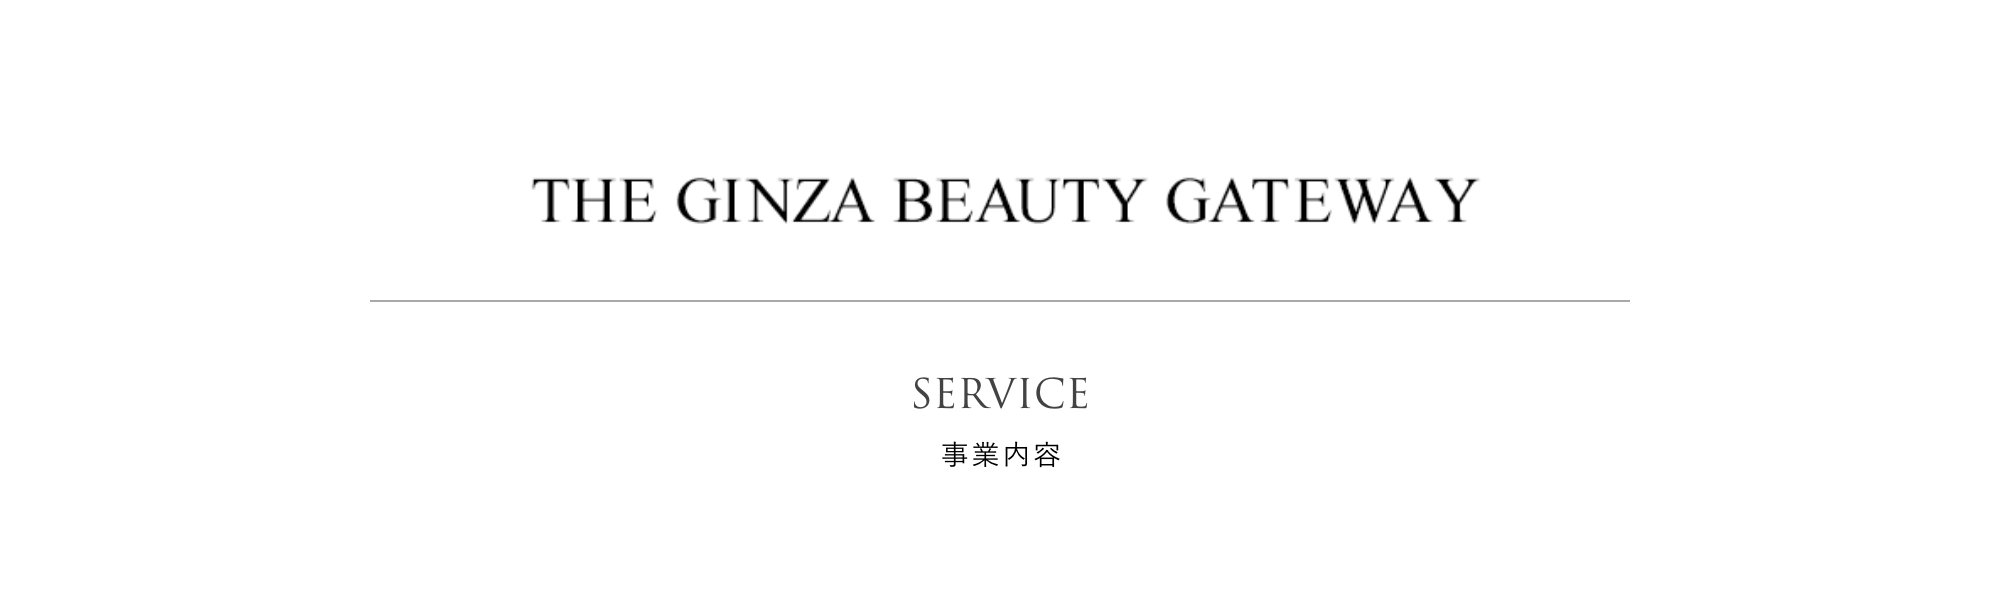 THE GINZA BEAUTY GATEWAY 事業内容